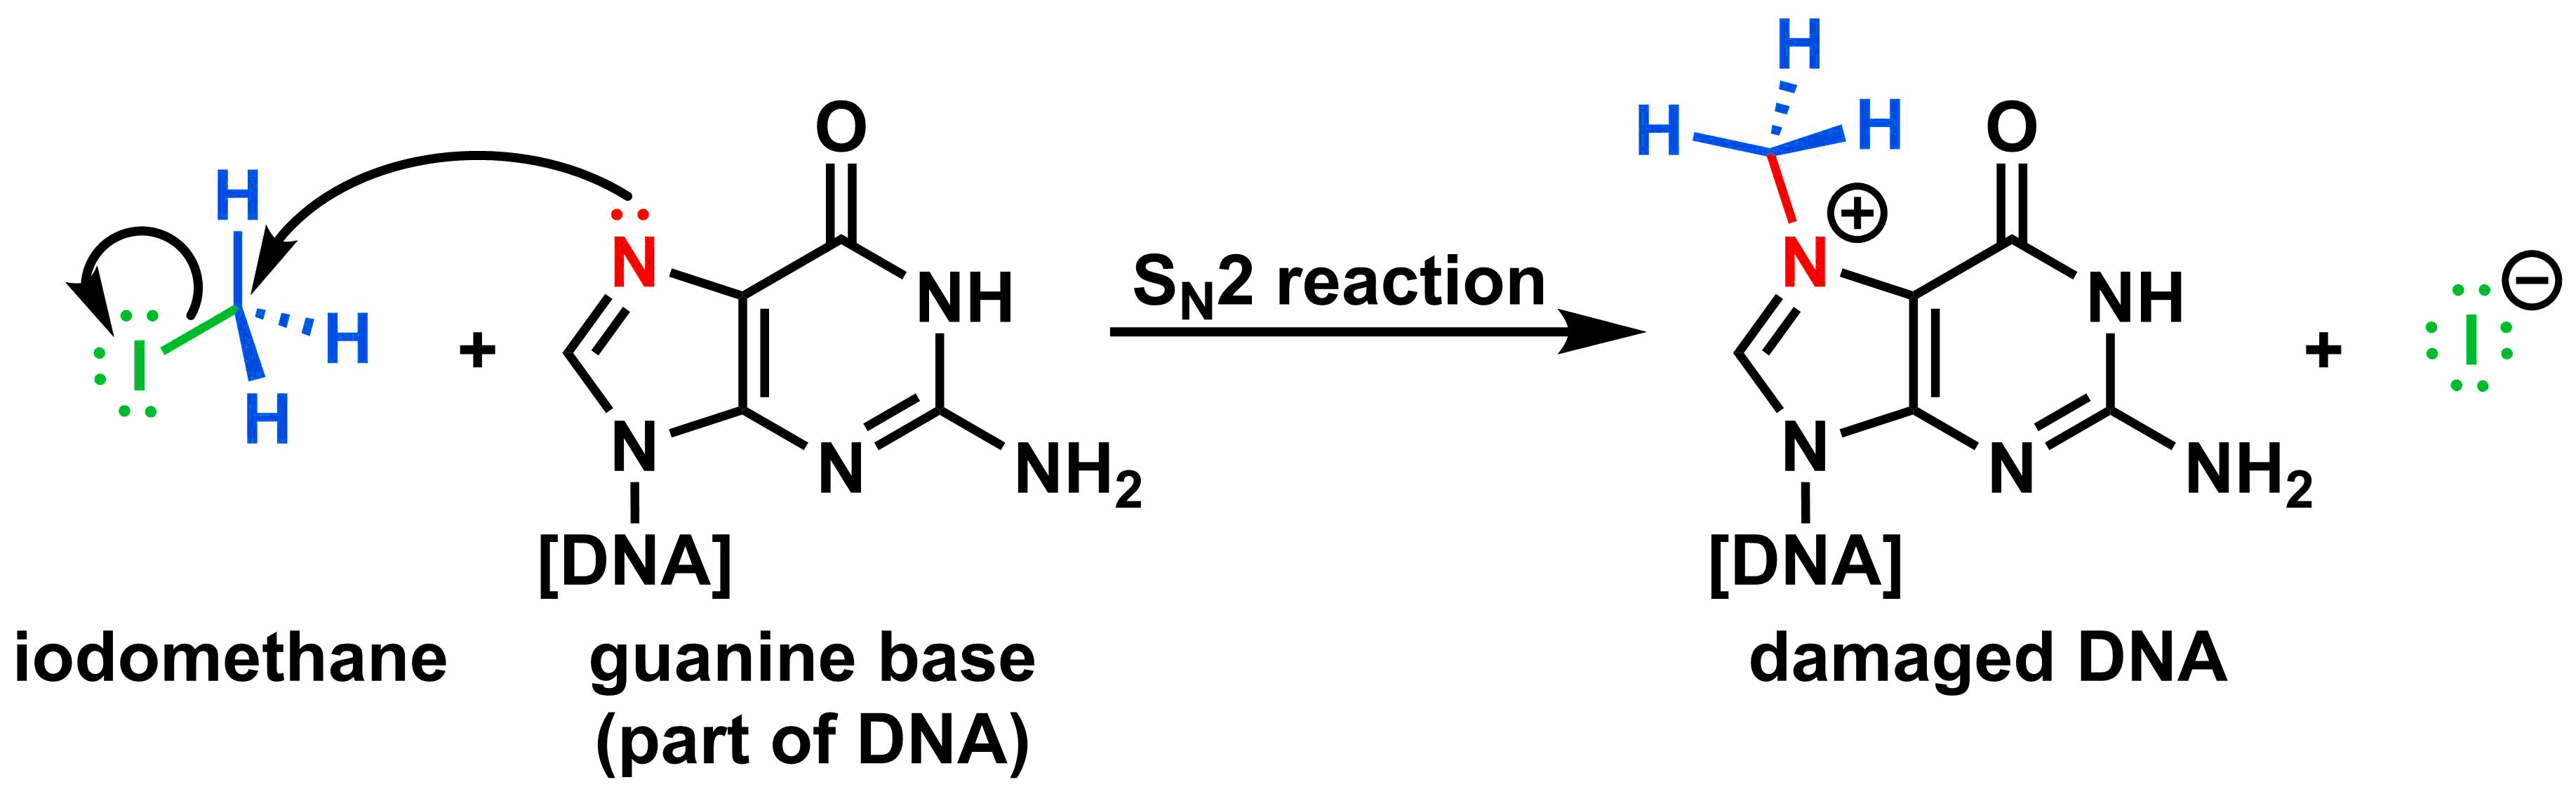 iodomethane-alkylating-mechanism-2